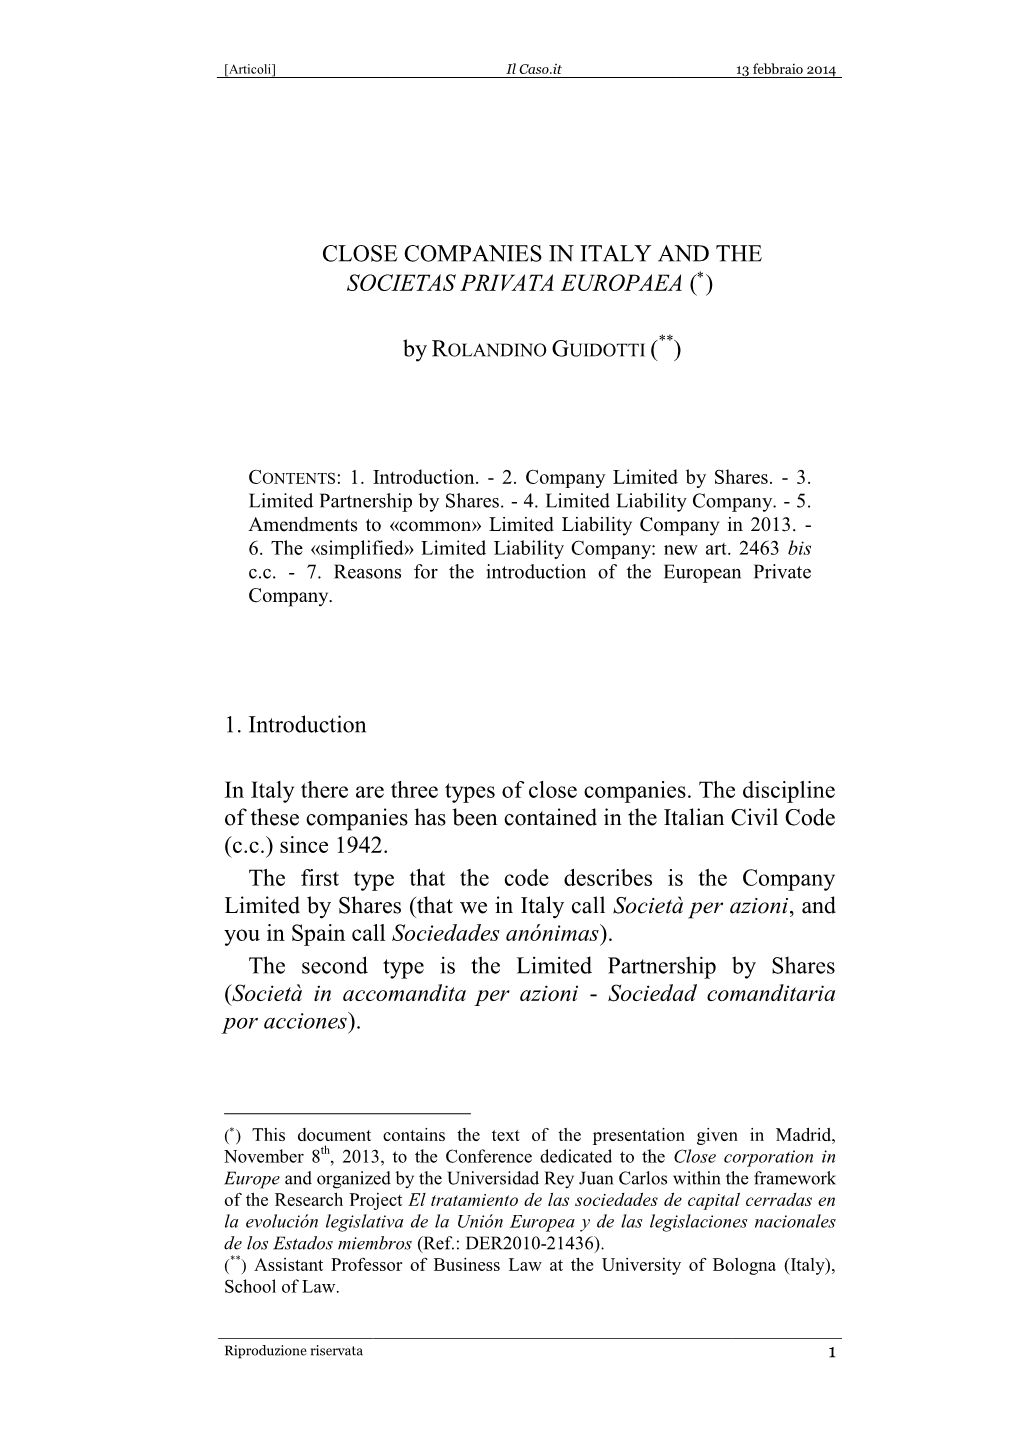 Close Companies in Italy and the Societas Privata Europaea ()